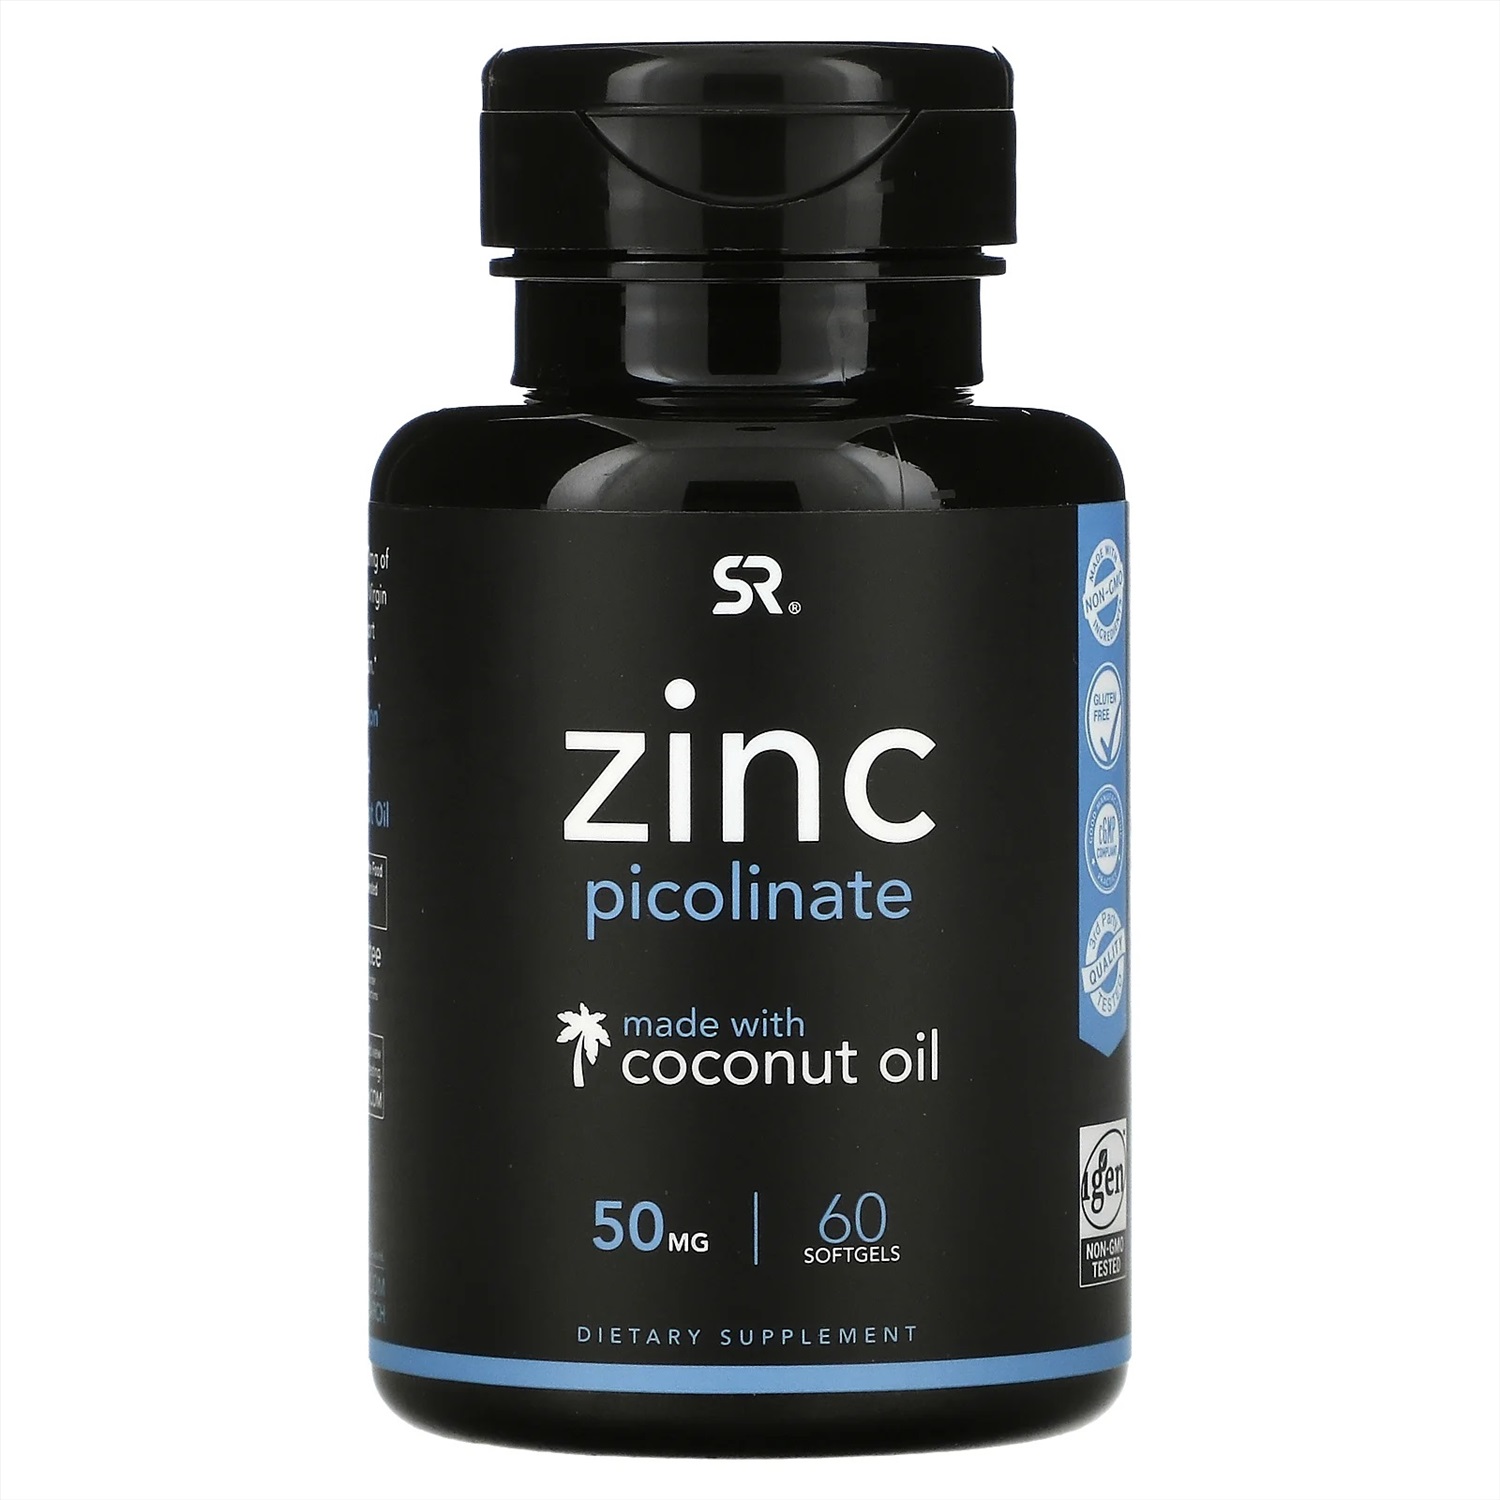 Zinc picolinate 50. Zinc Picolinate 50 MG - Now 120 капсул. 50 MCG цинк. Zinc Picolinate капсулы. Zinc cireate 50 MG.